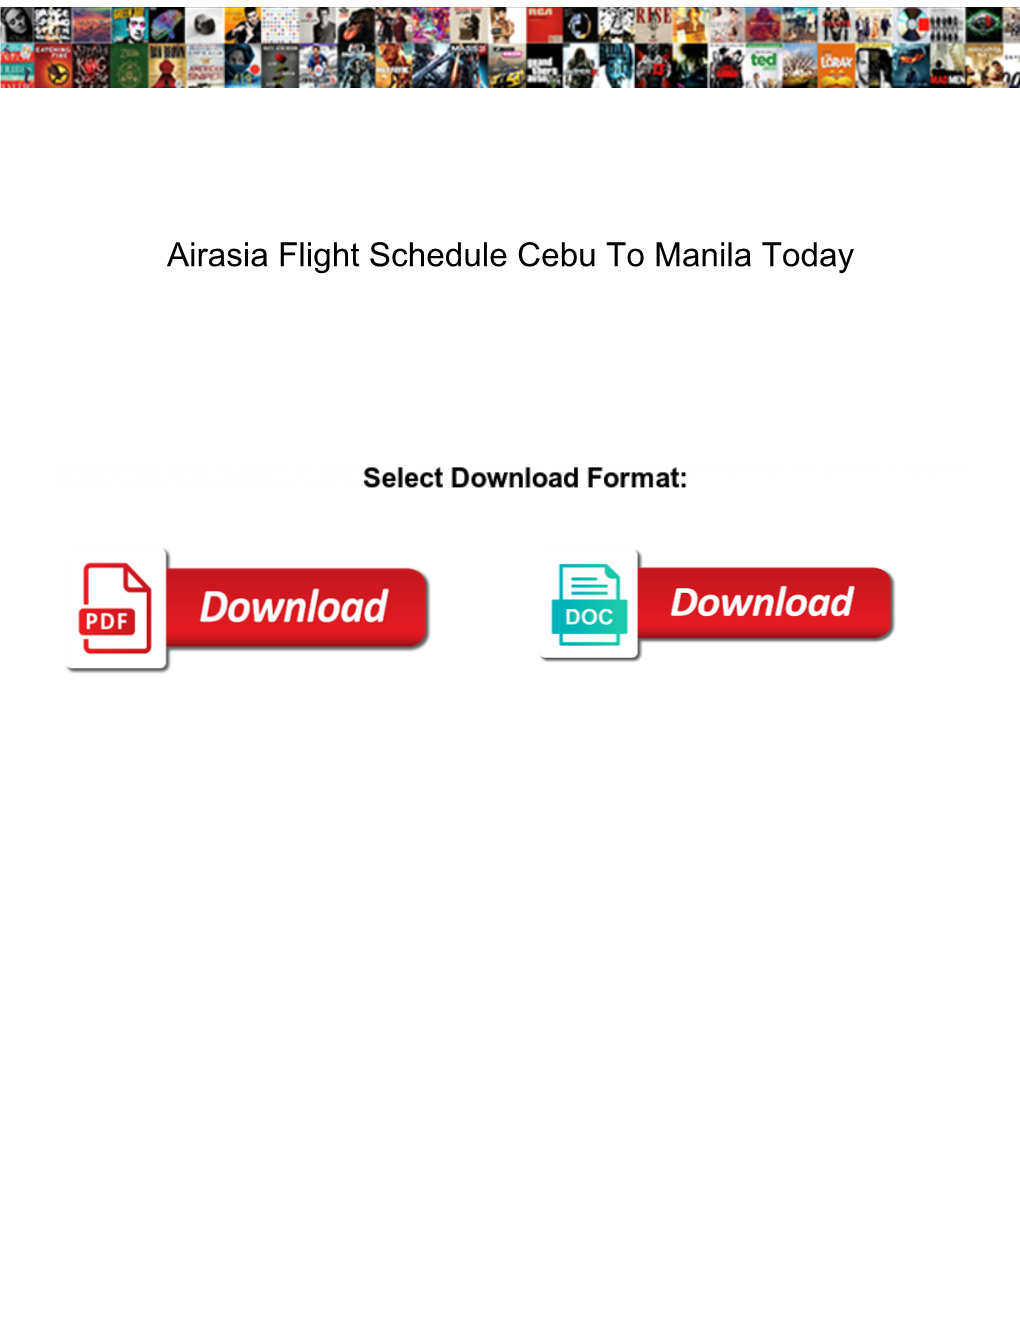 Airasia Flight Schedule Cebu to Manila Today